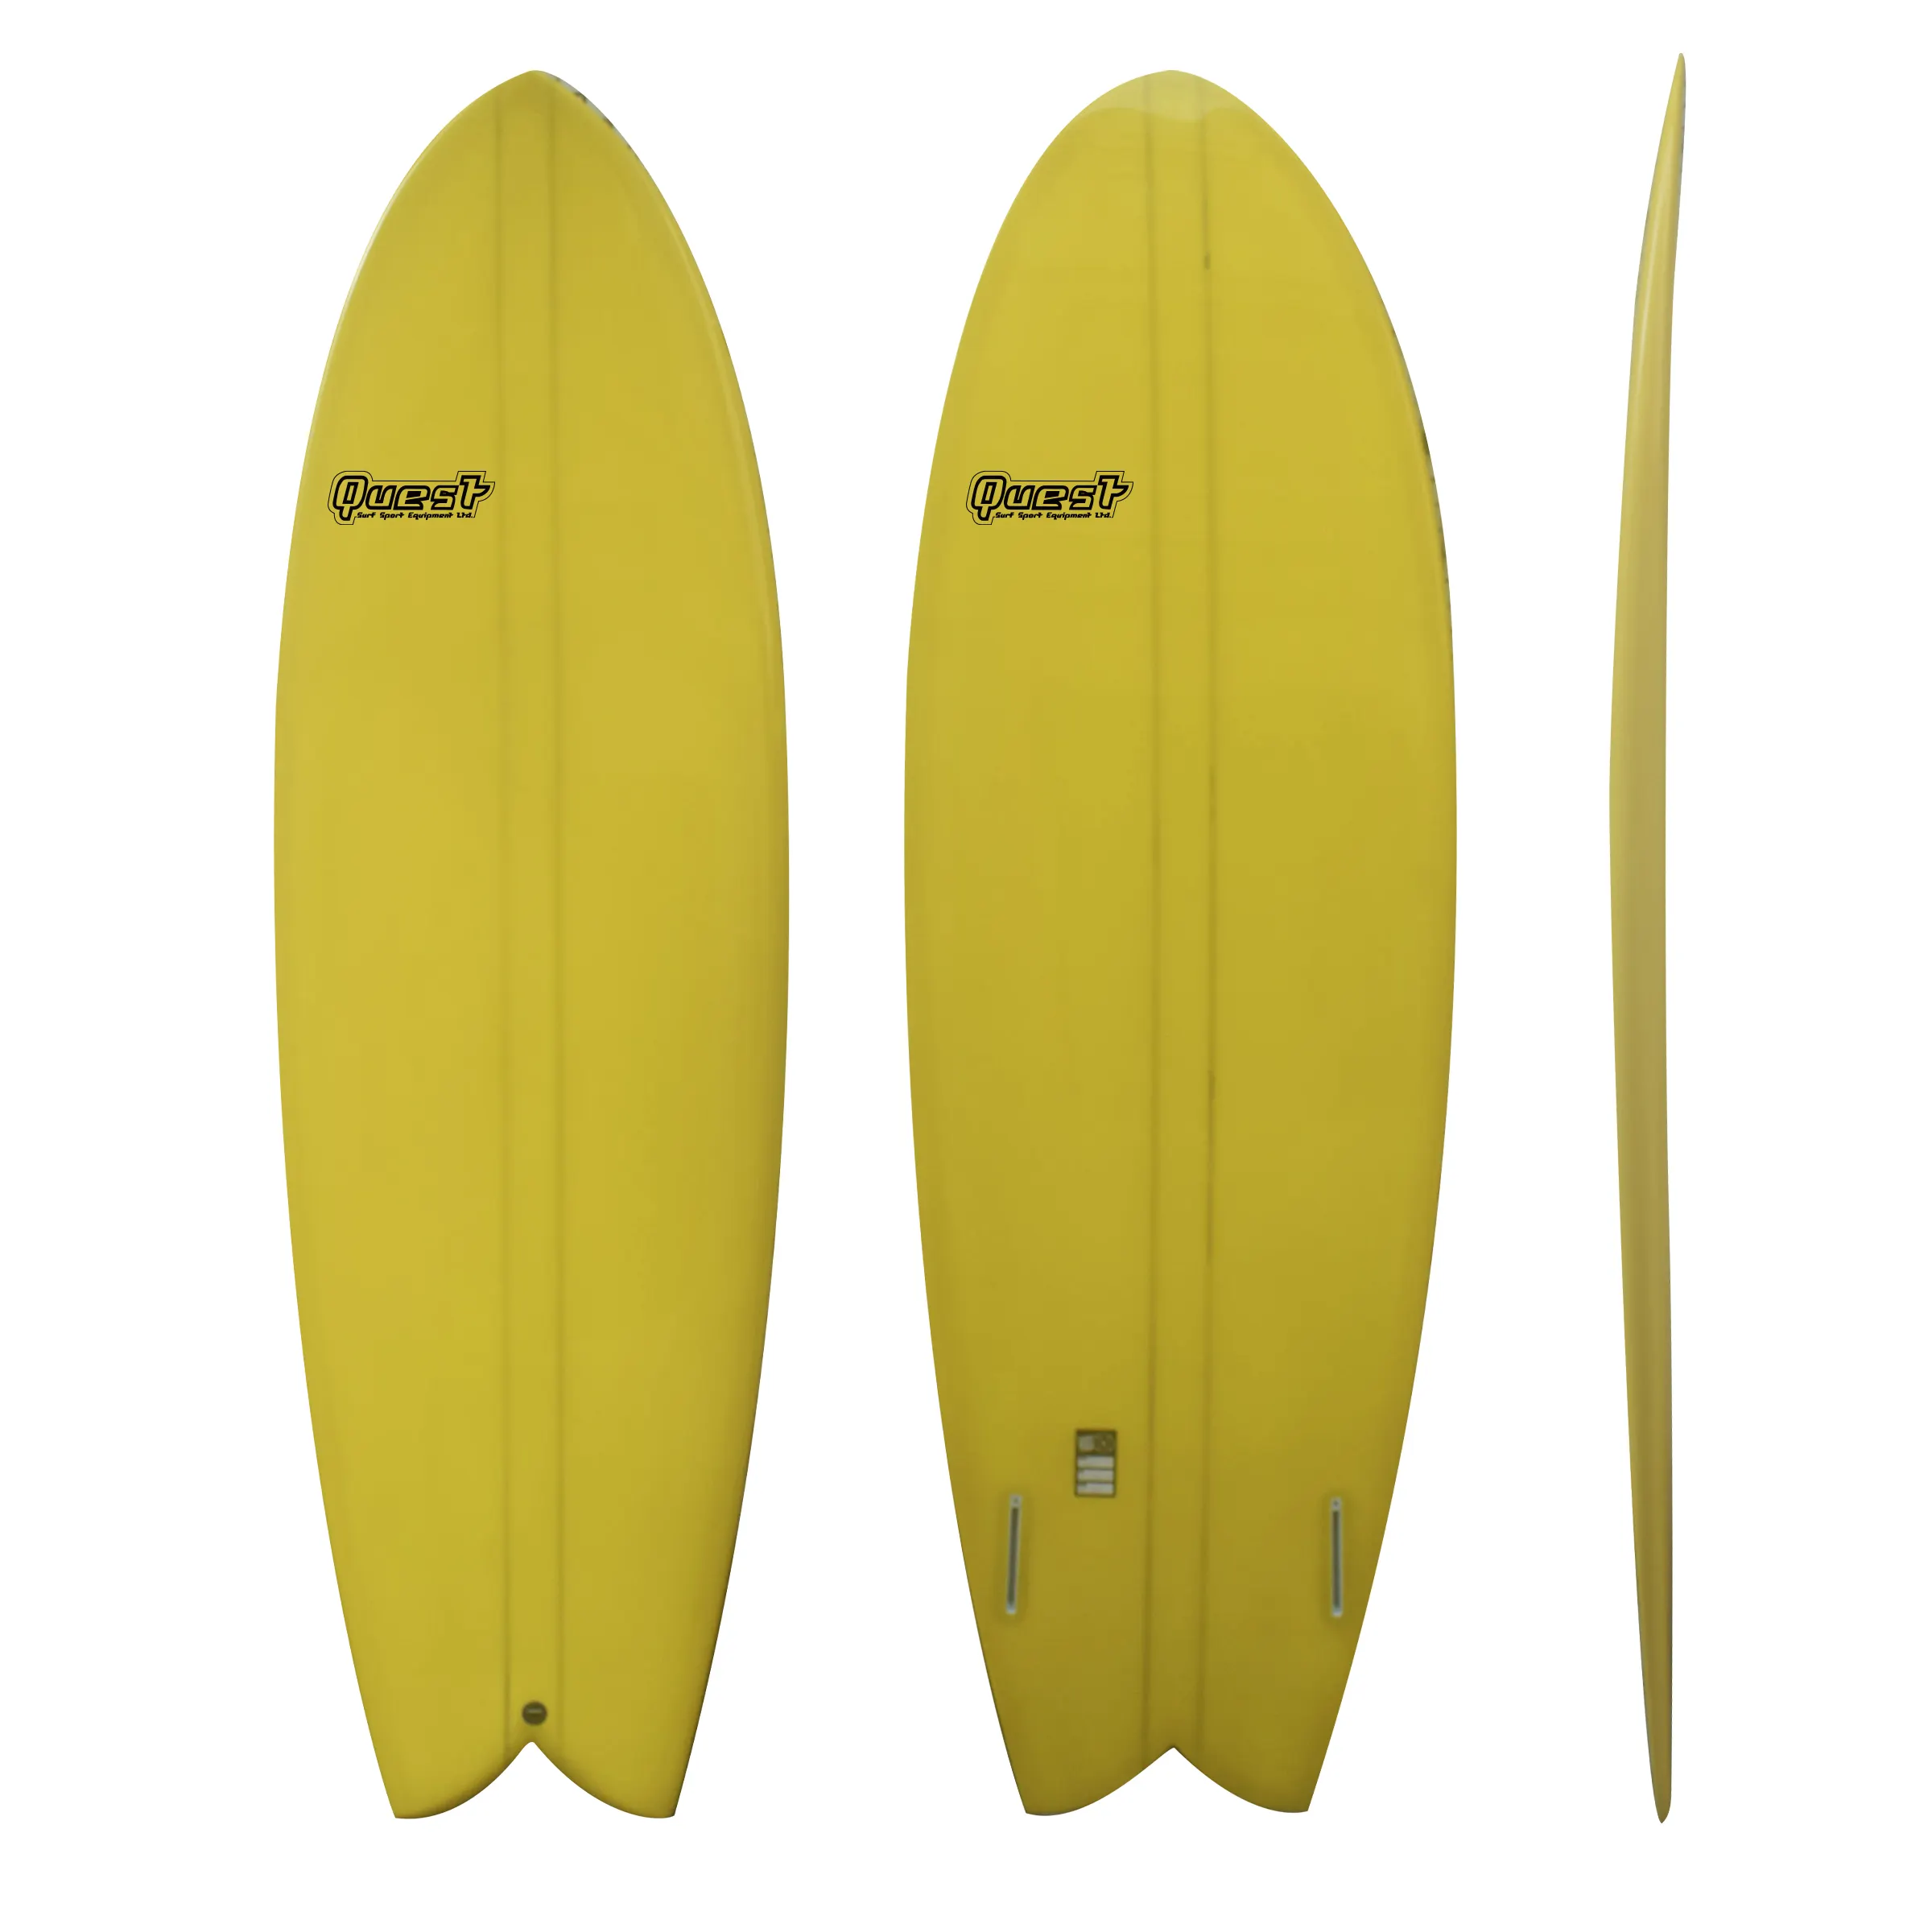 Performance High Quality EPS Blank Epoxy Resin Tint Retro Fish Short Board Surfboard